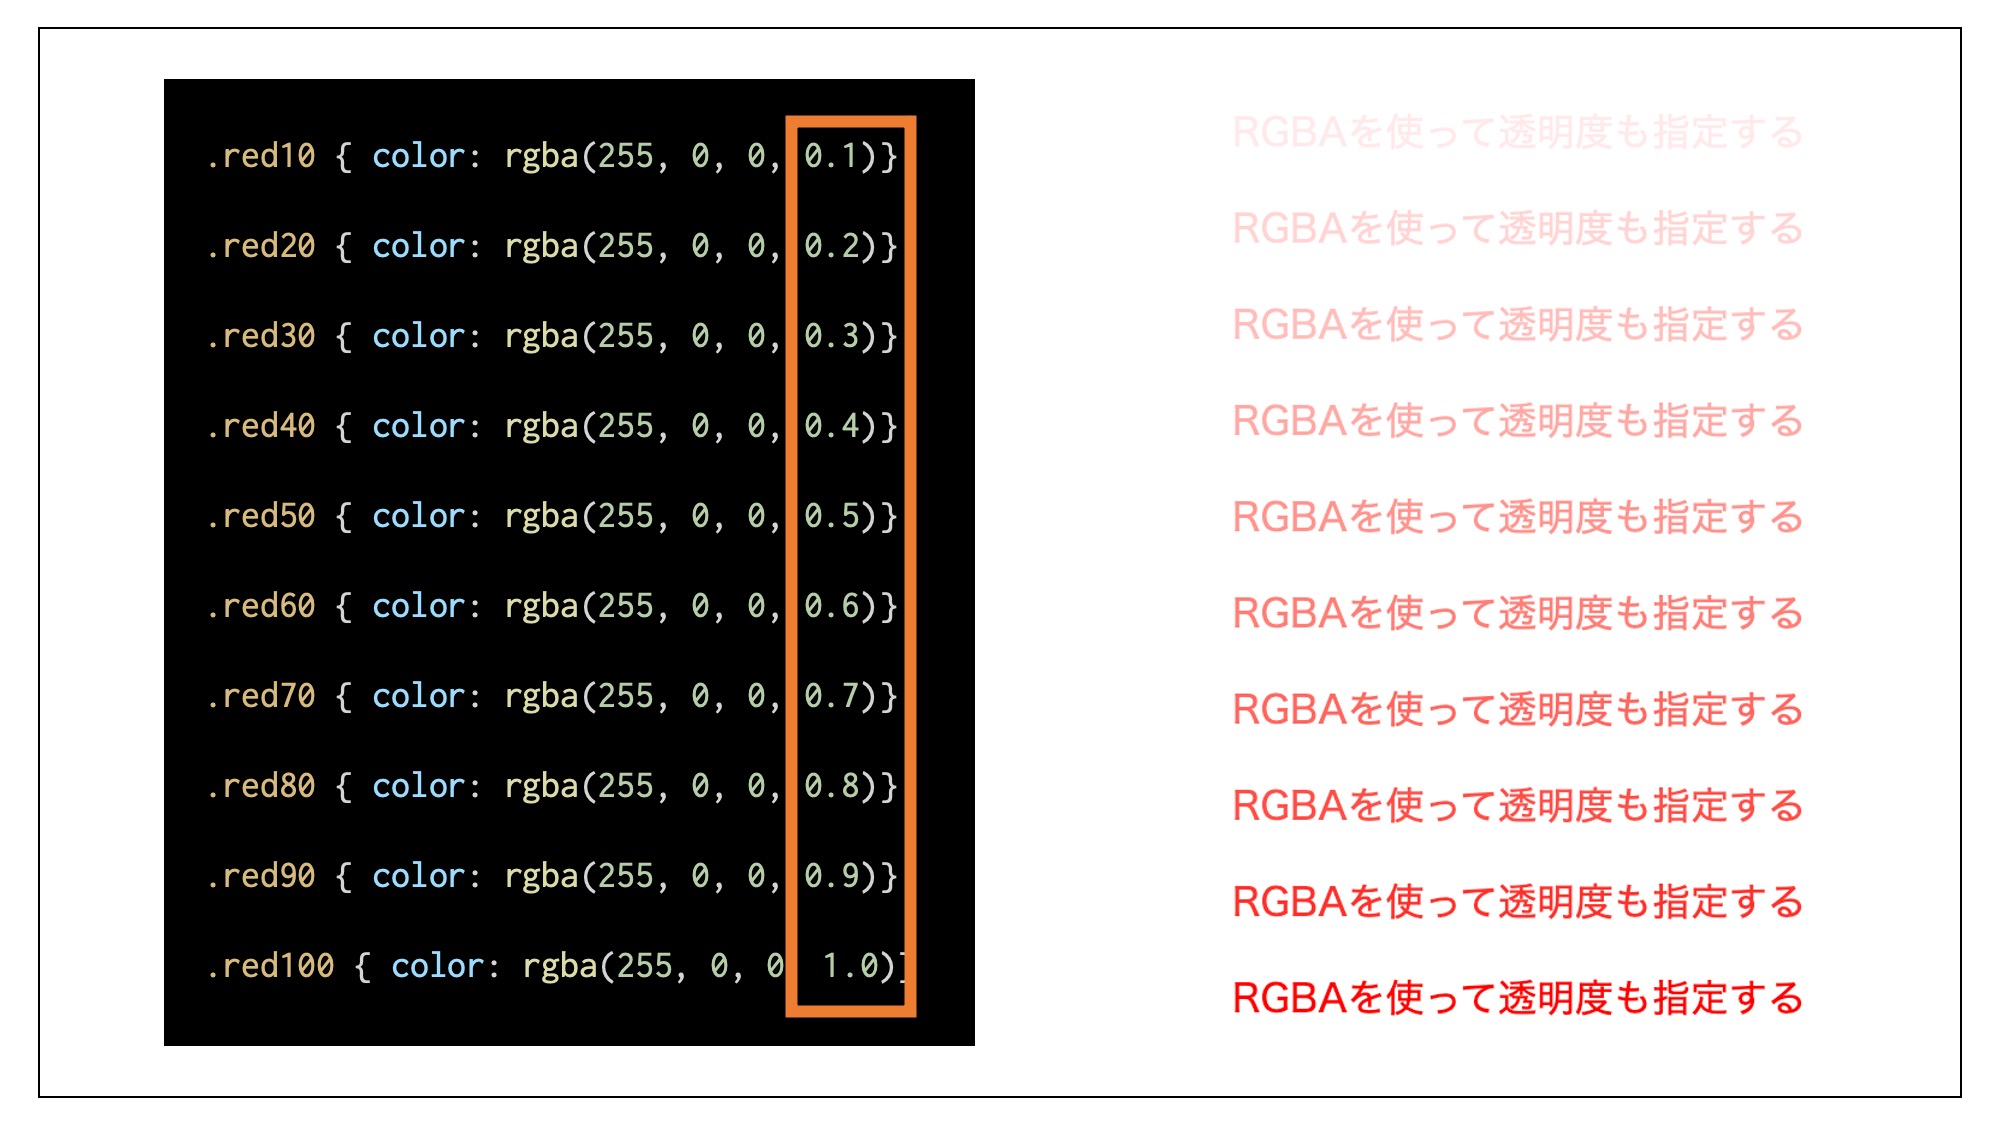 RGBAを使用して色に不透明度を追加している例